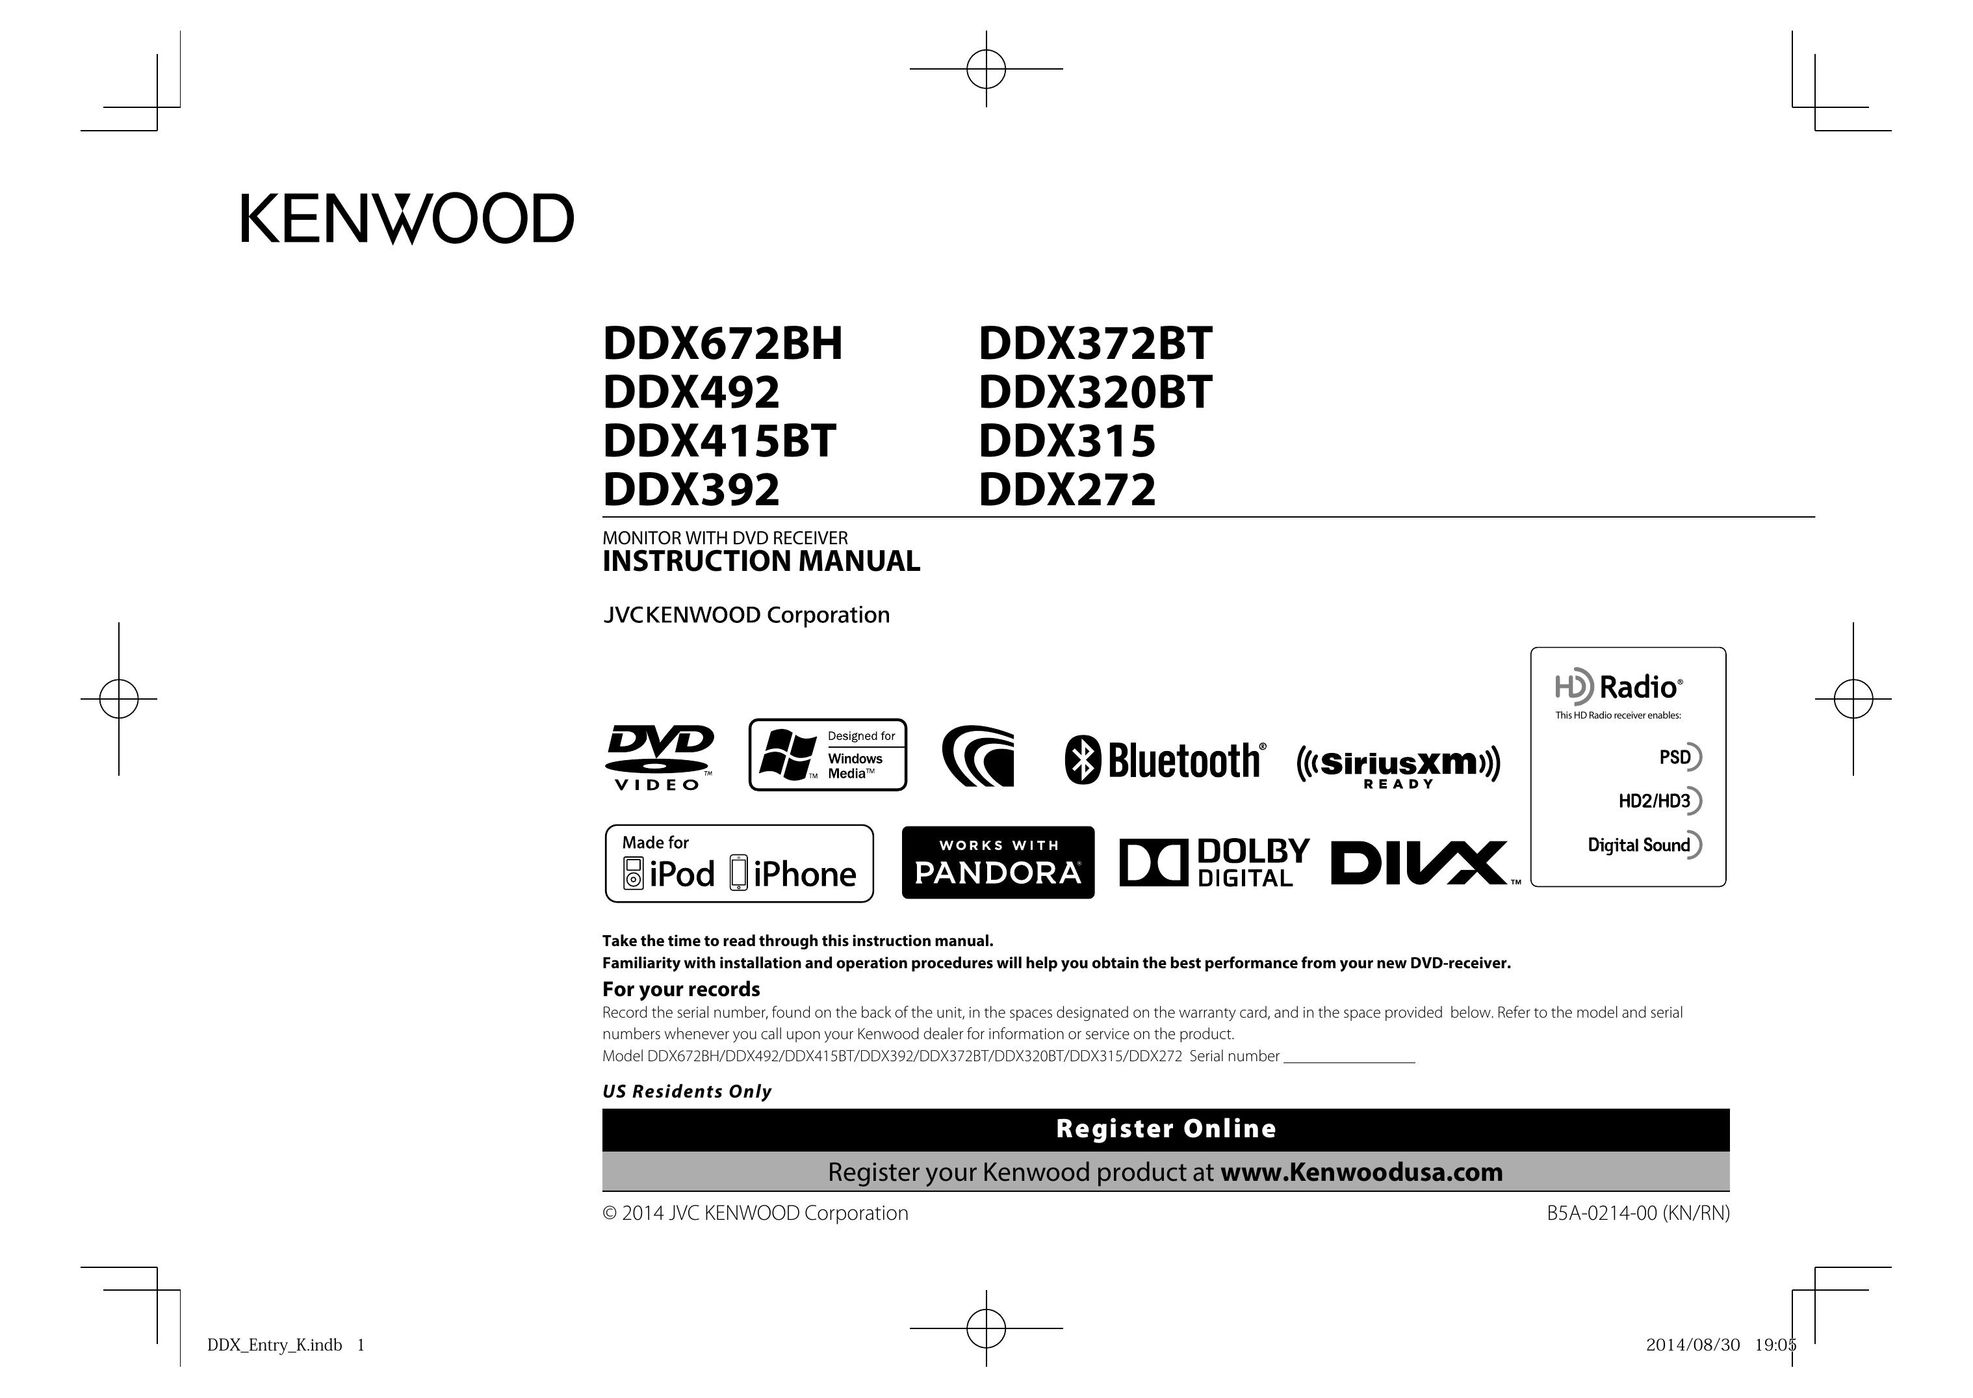 Kenwood DDX315 Car Video System User Manual